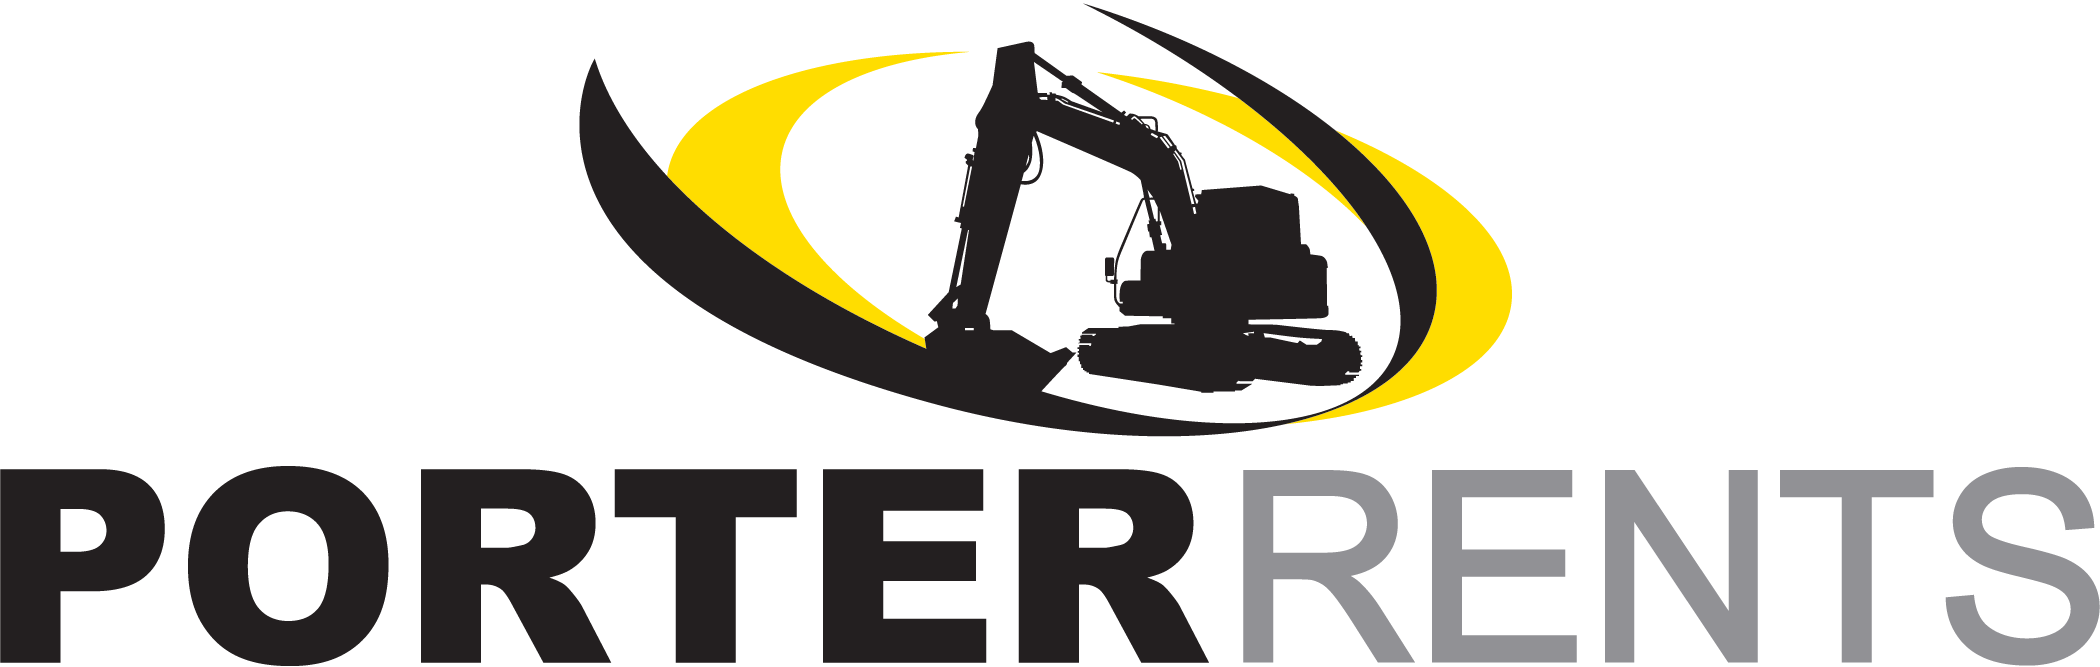 Porter Group USA | Heavy Construction Equipment Sales & Rentals Logo